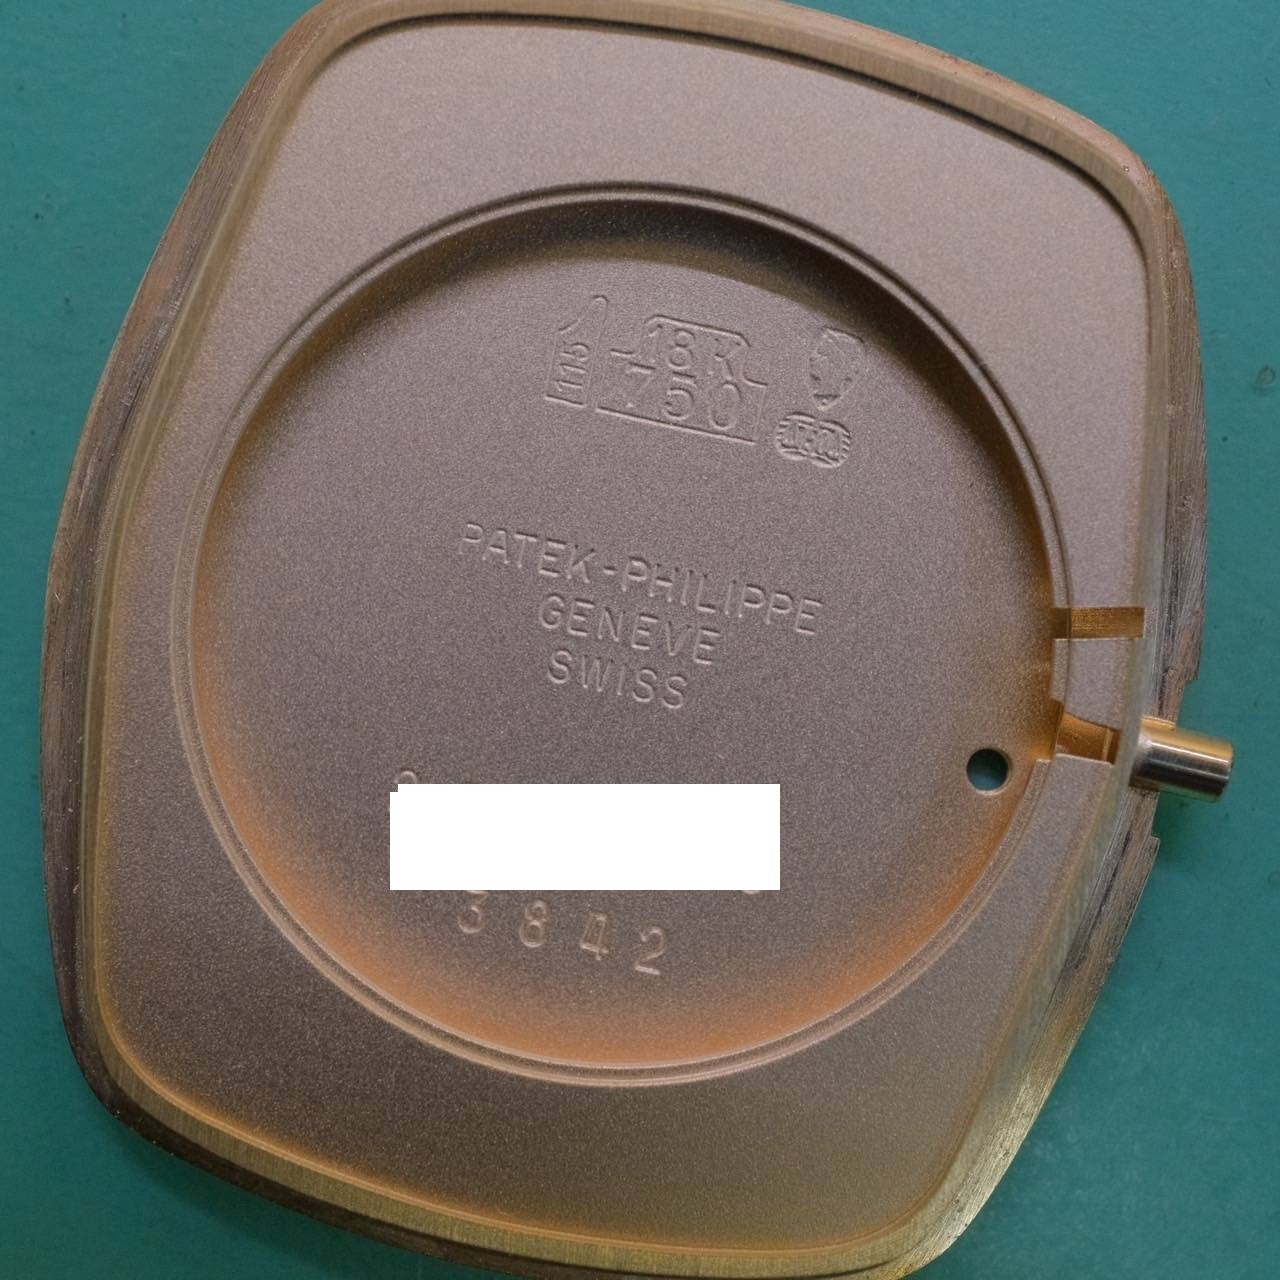 PATEK PHILIPPE GONDOLO 3842 Manual winding Cal.177 PG Leather Genuine buckle (750) Silver dial Box Case Warranty (2000)